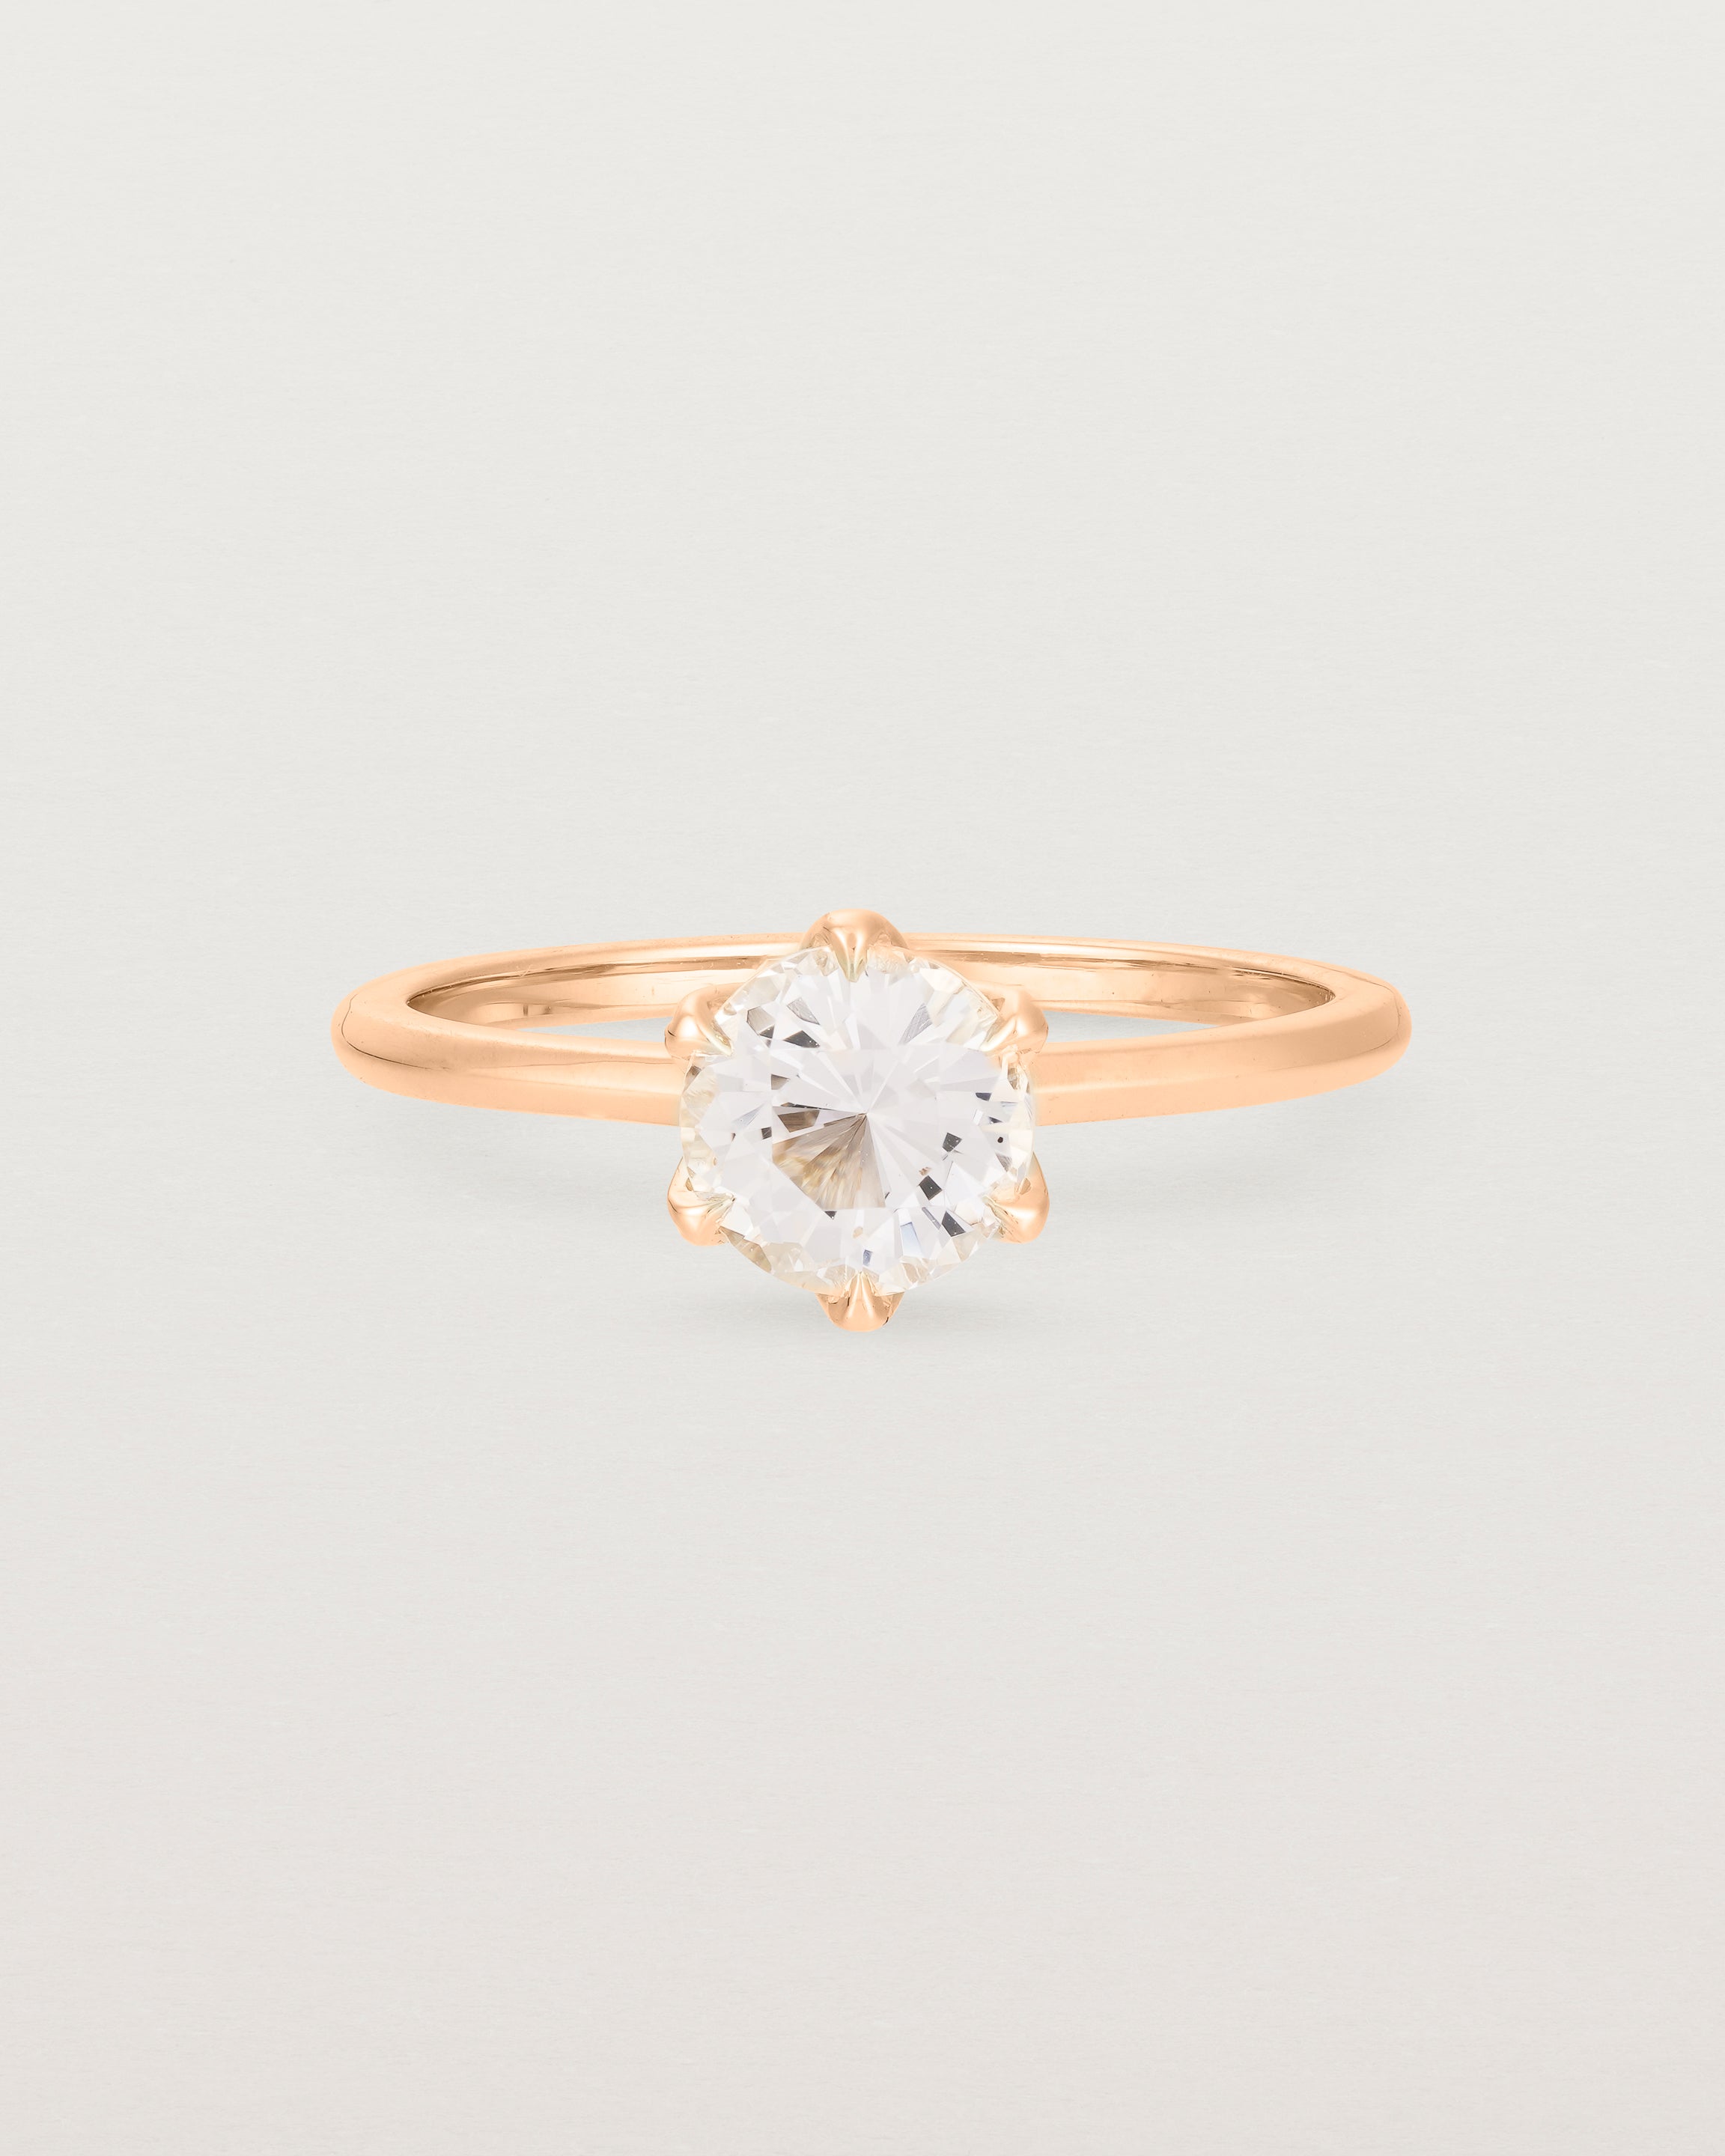 Front view of the Mandala Solitaire Ring | Morganite & Diamonds | Rose Gold. 